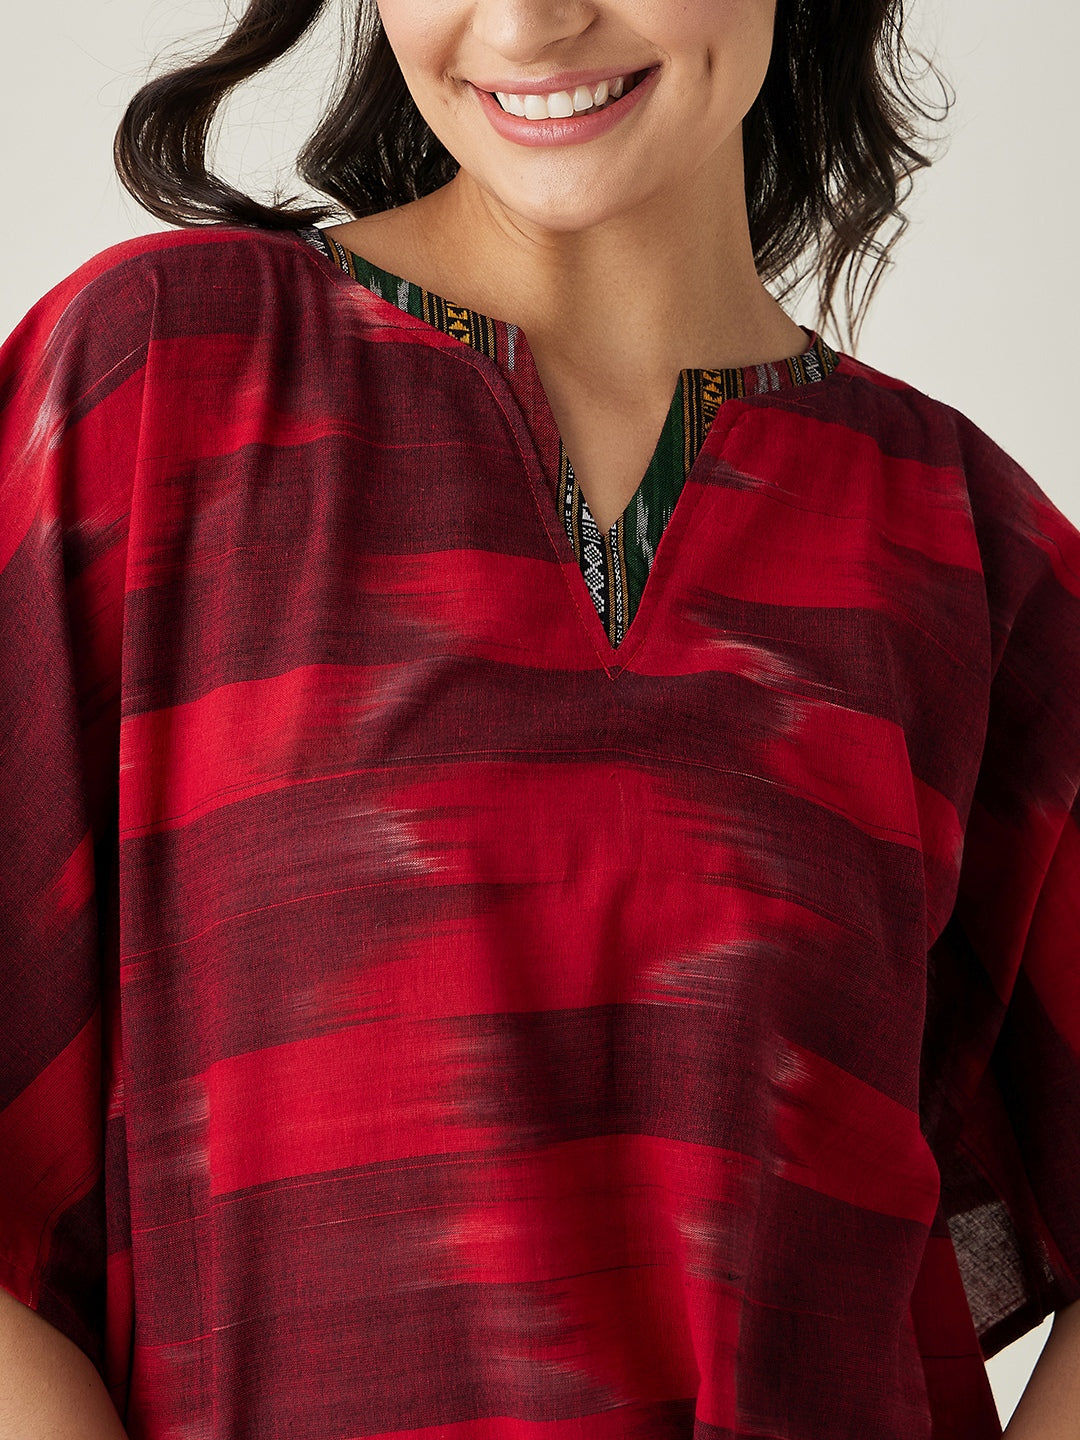 Women's Red Handloom Ikat Weave Cotton Kaftan - The Kaftan Company